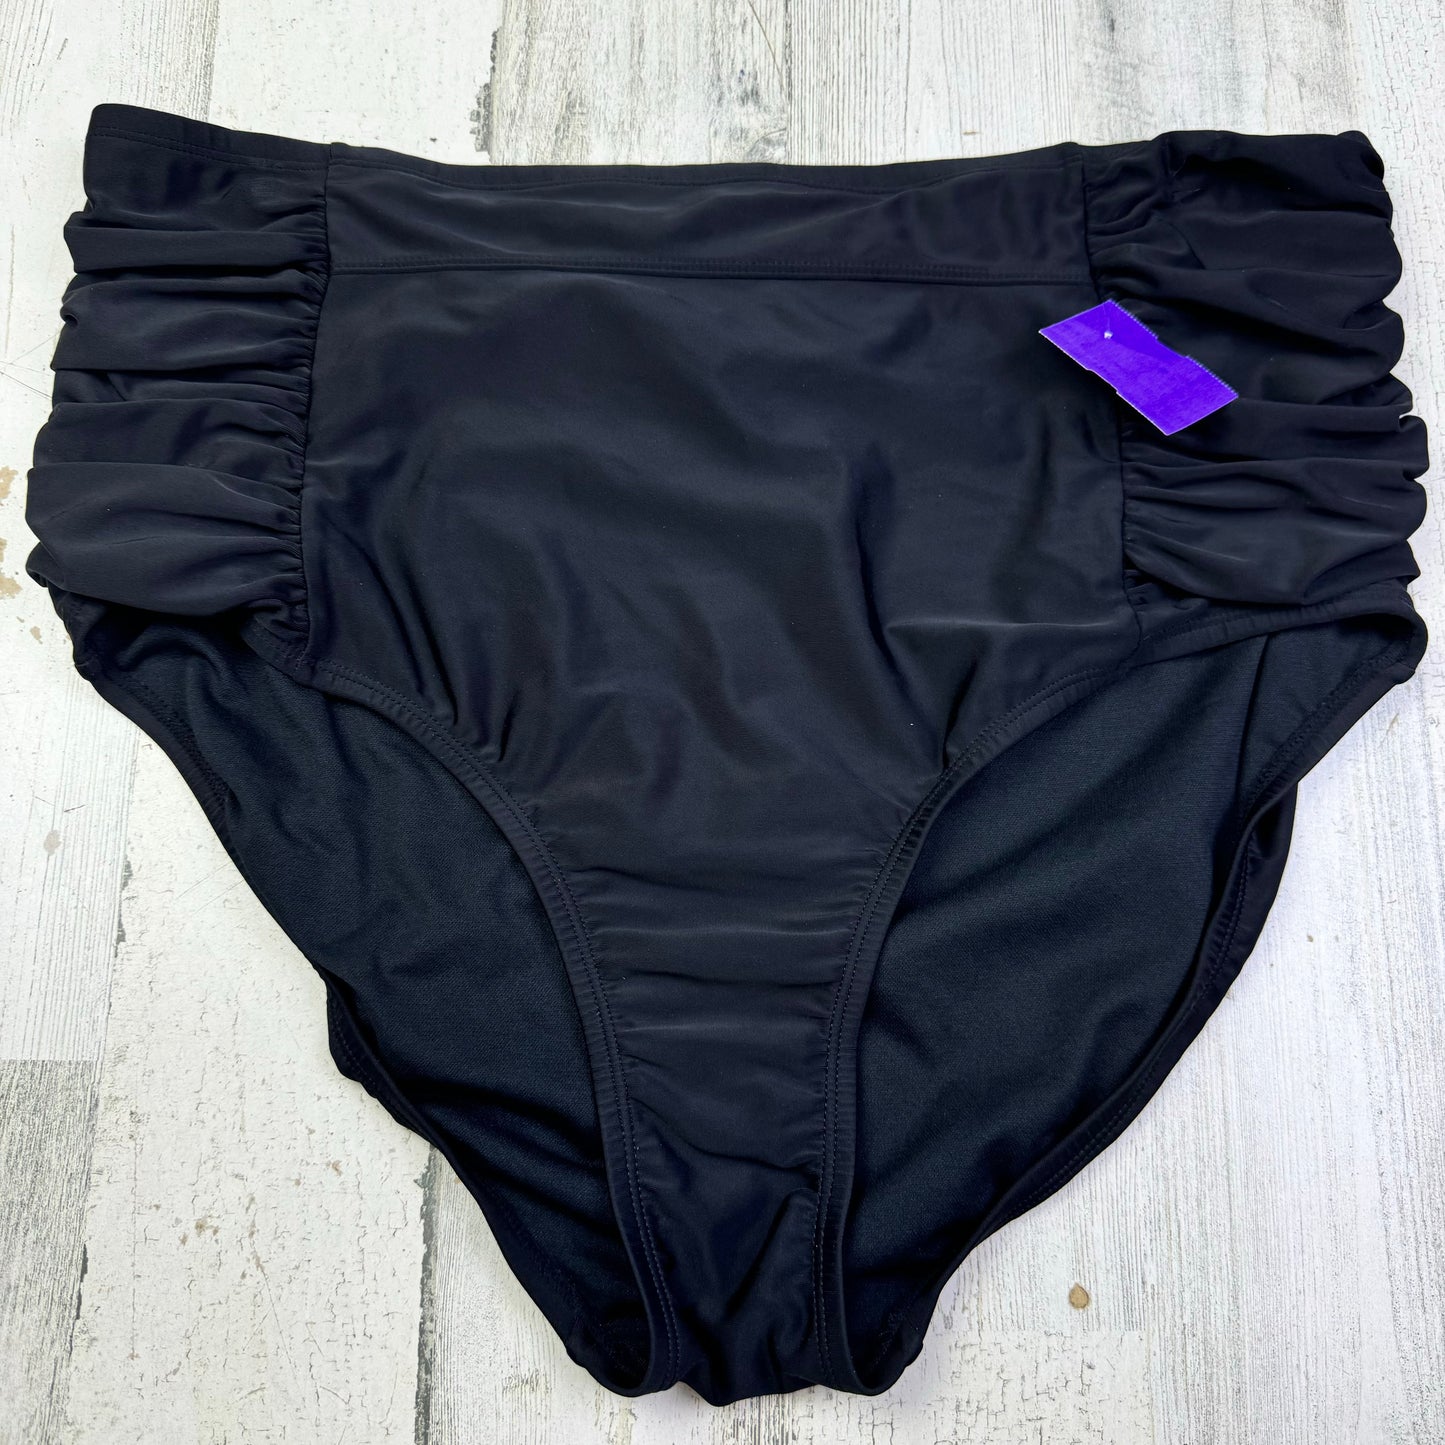 Black Swimsuit Bottom Kona Sol, Size 2x